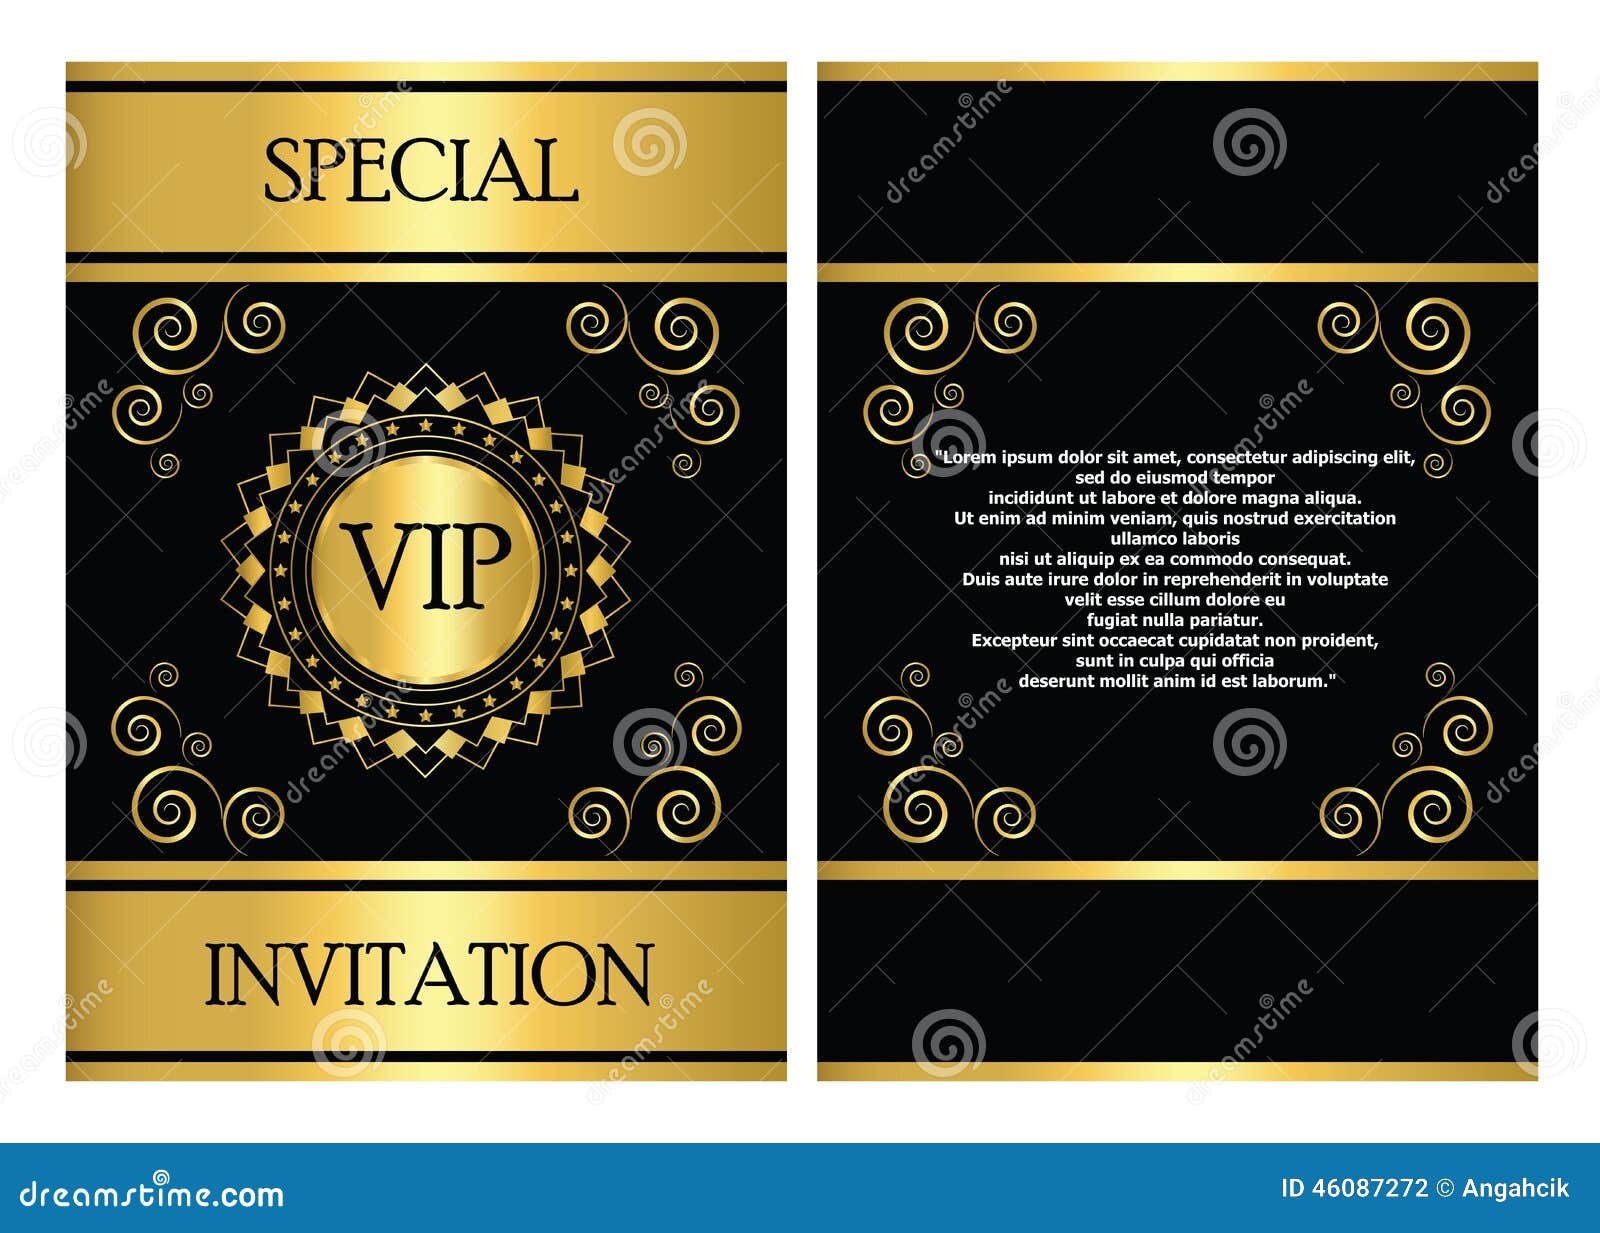 vip-invitation-card-template-stock-vector-image-46087272